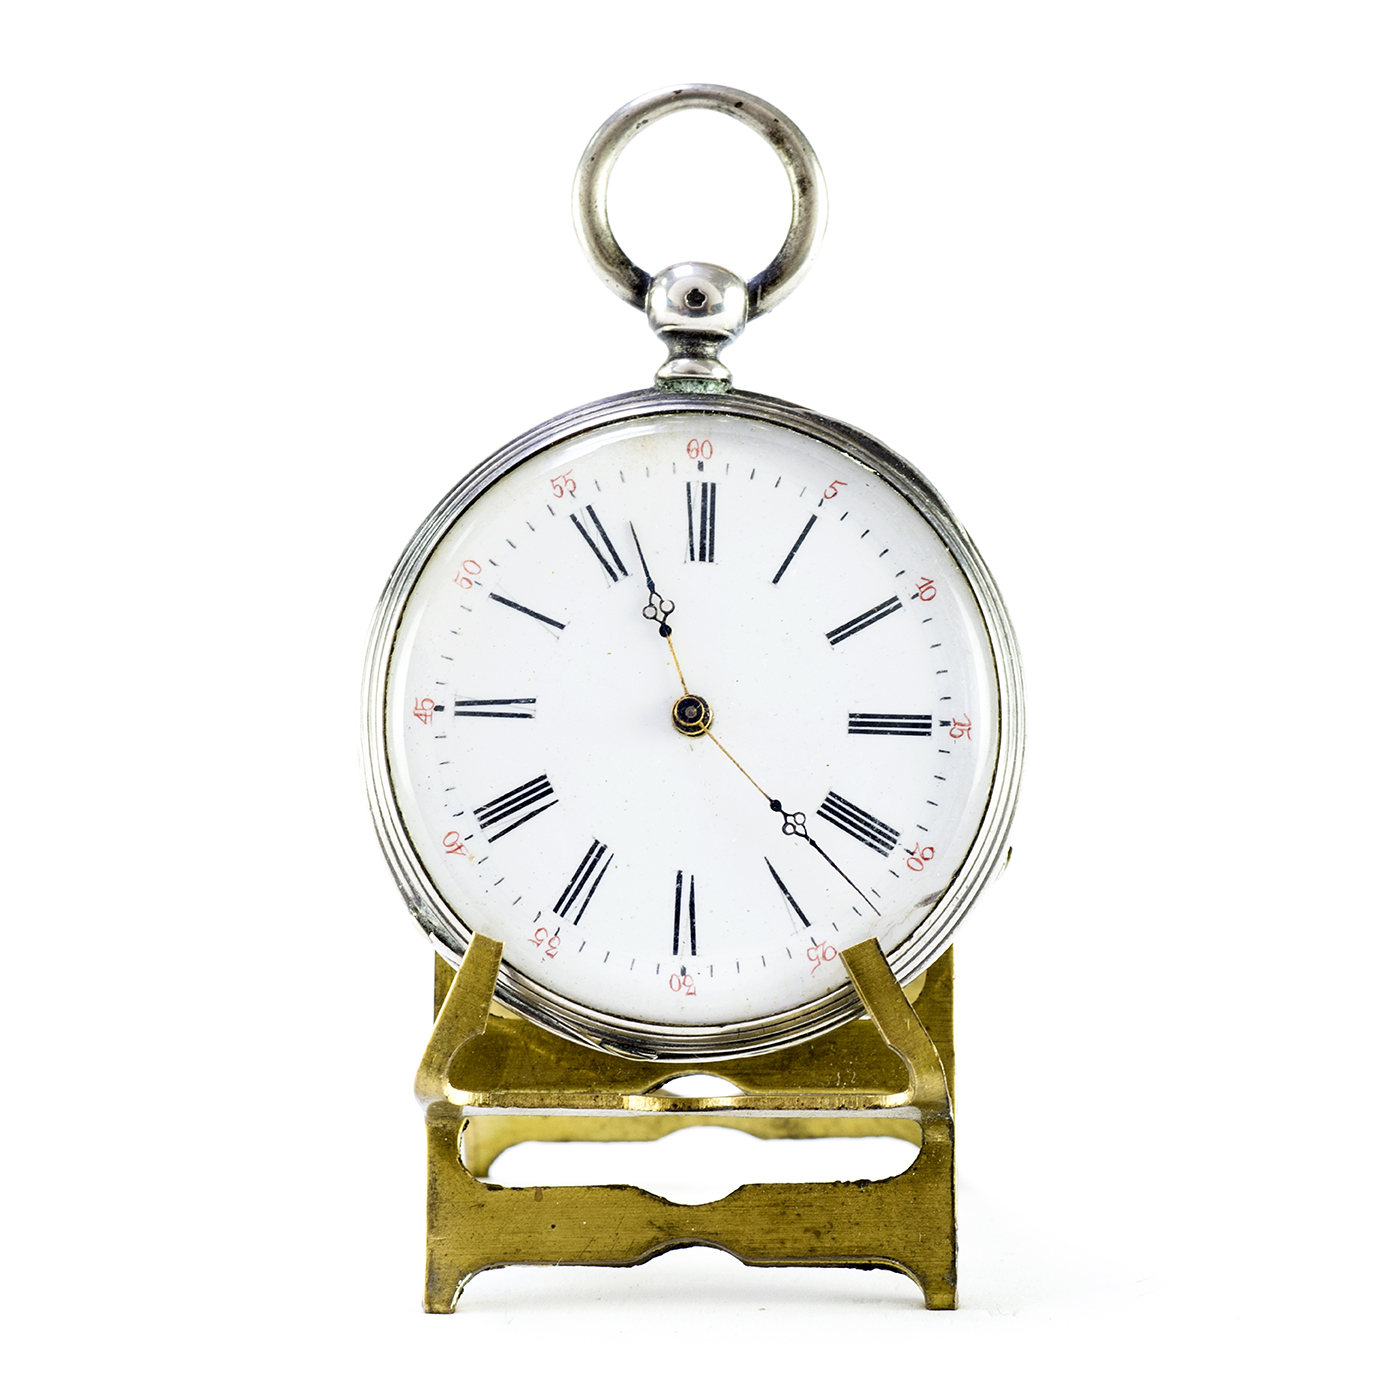 B.J.A. Reloj Suizo de Bolsillo, lepine. Ca. 1890